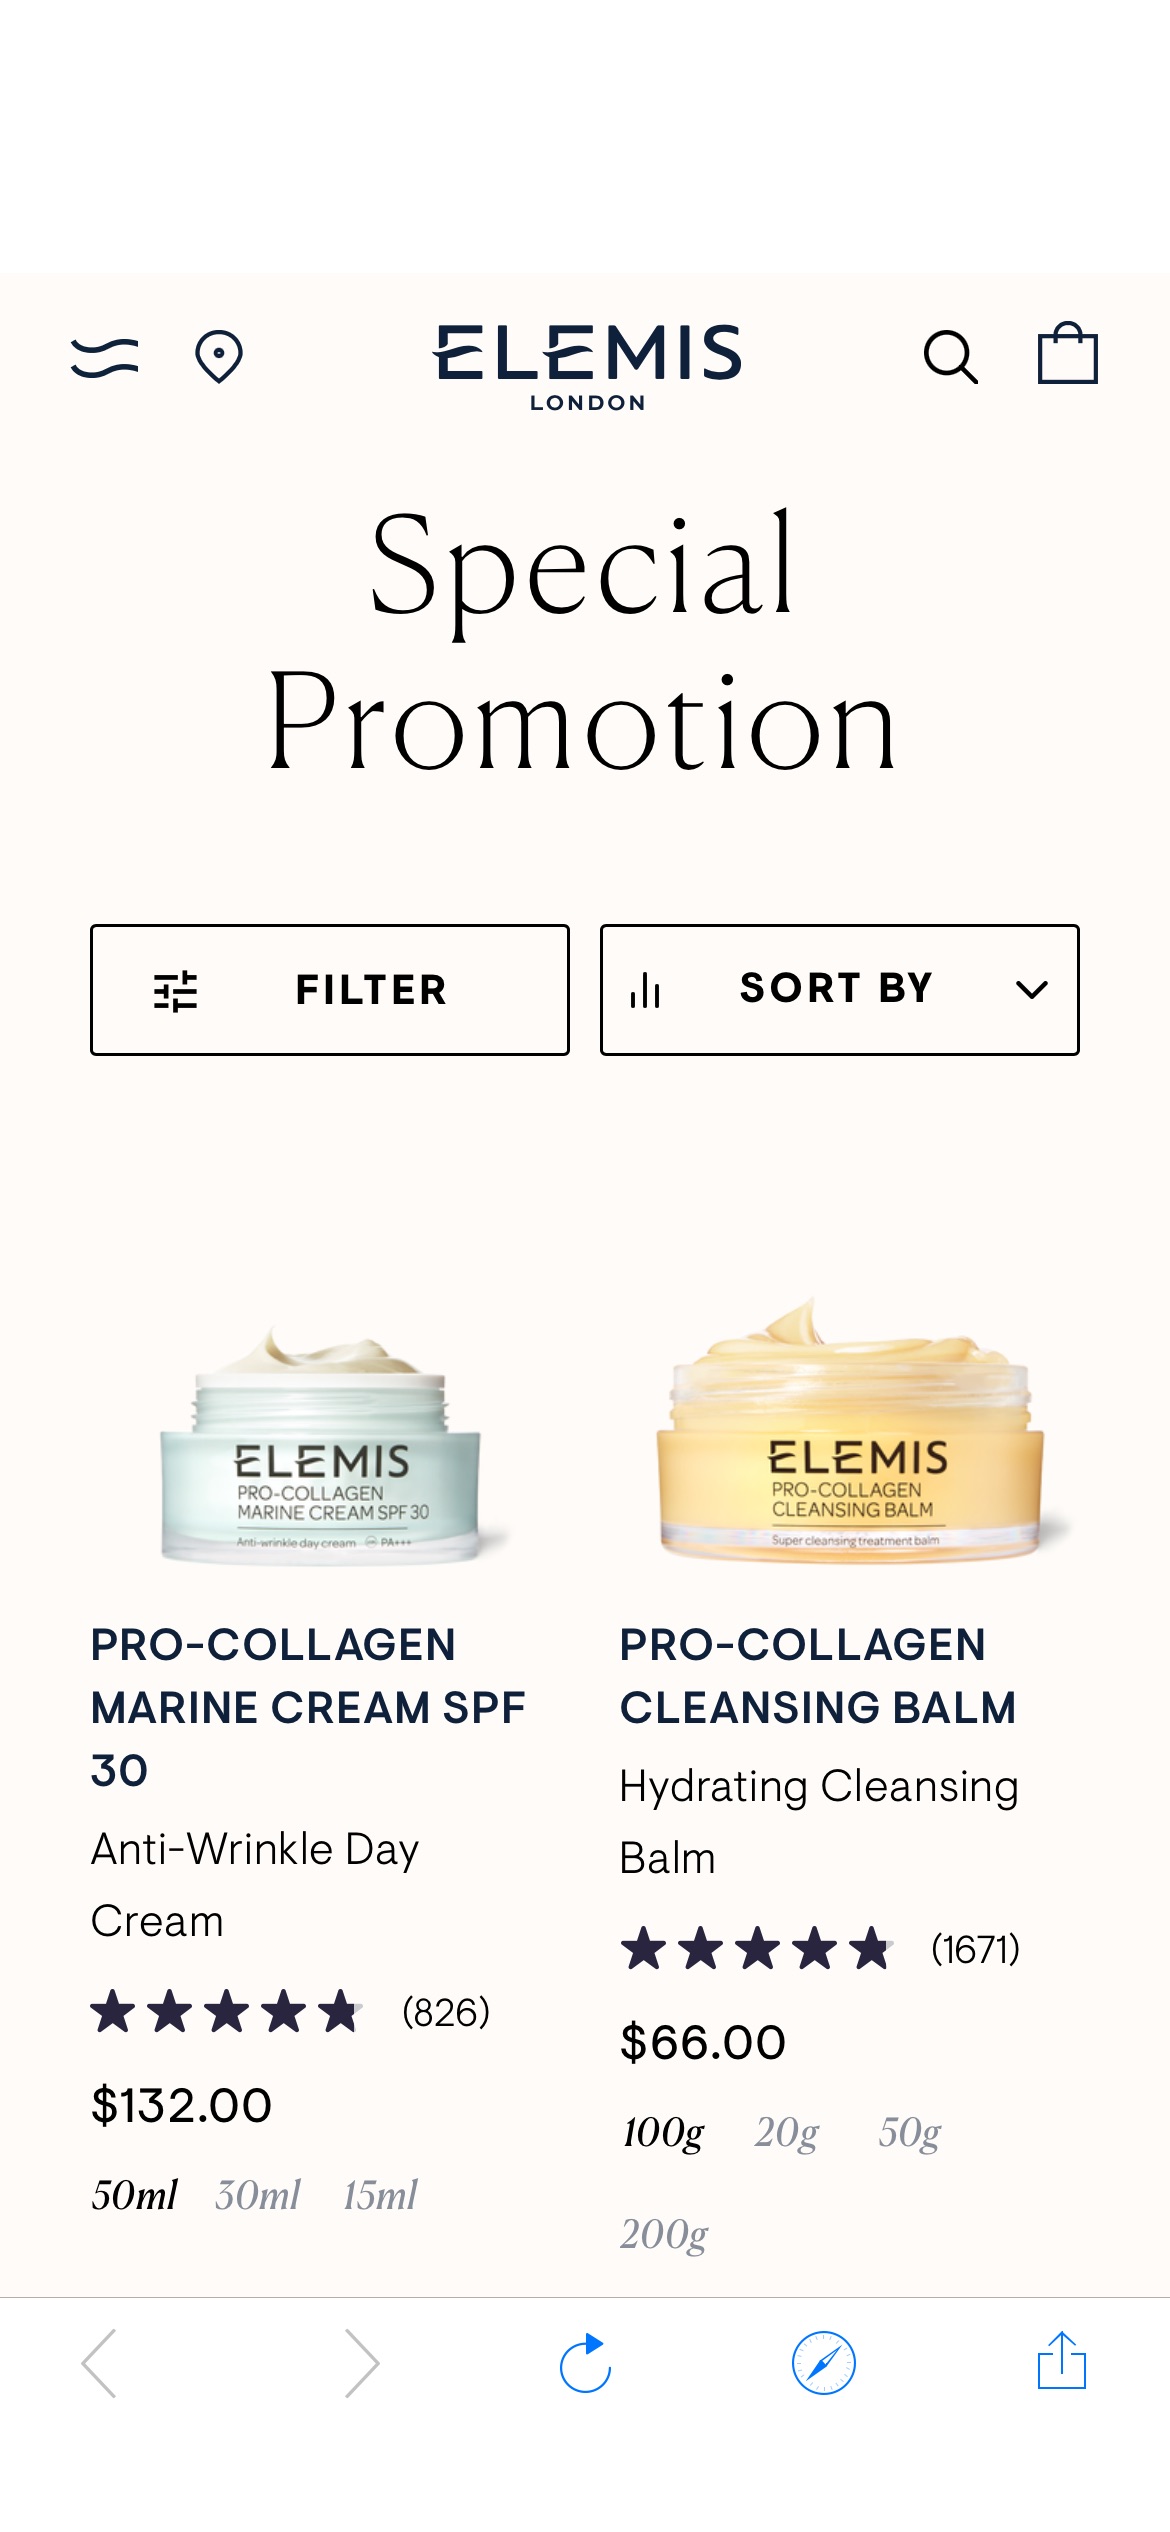 More Presents. More Savings. ELEMIS：最后几小时：购买 2 件全尺寸护肤品，这是您获得免费全尺寸护肤品的最后机会！*

 使用代码：savings